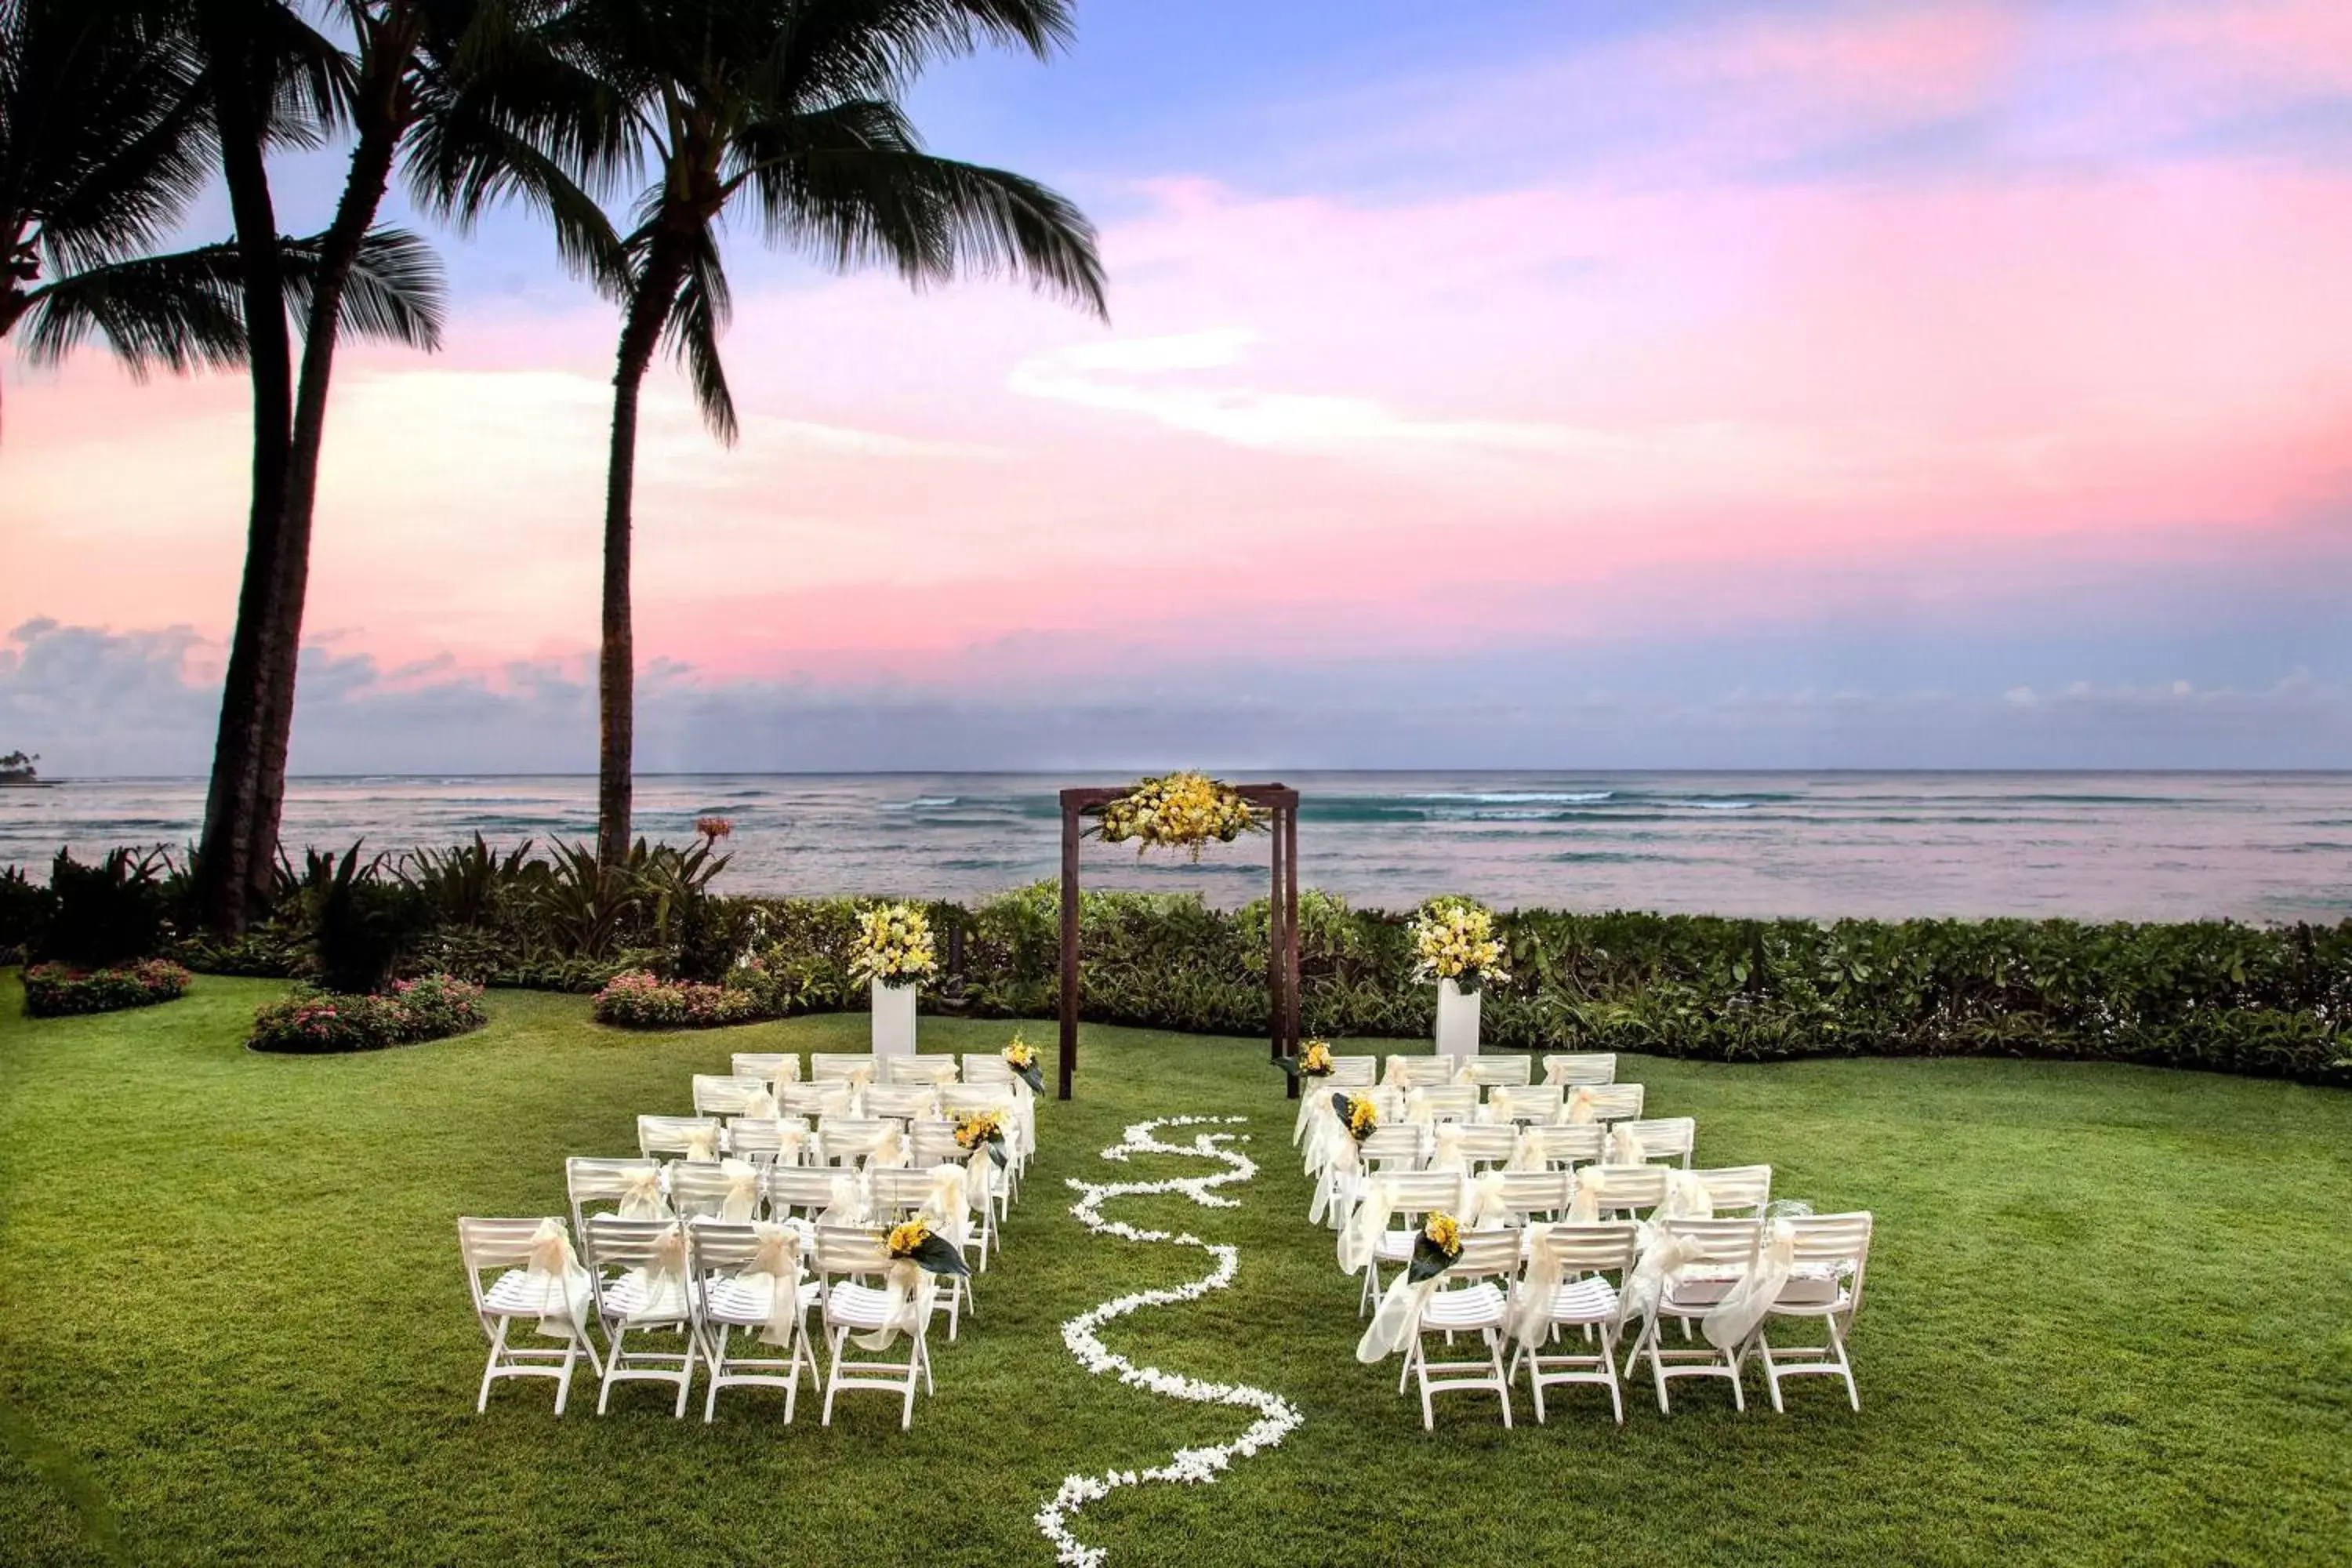 Banquet/Function facilities, Banquet Facilities in Moana Surfrider, A Westin Resort & Spa, Waikiki Beach